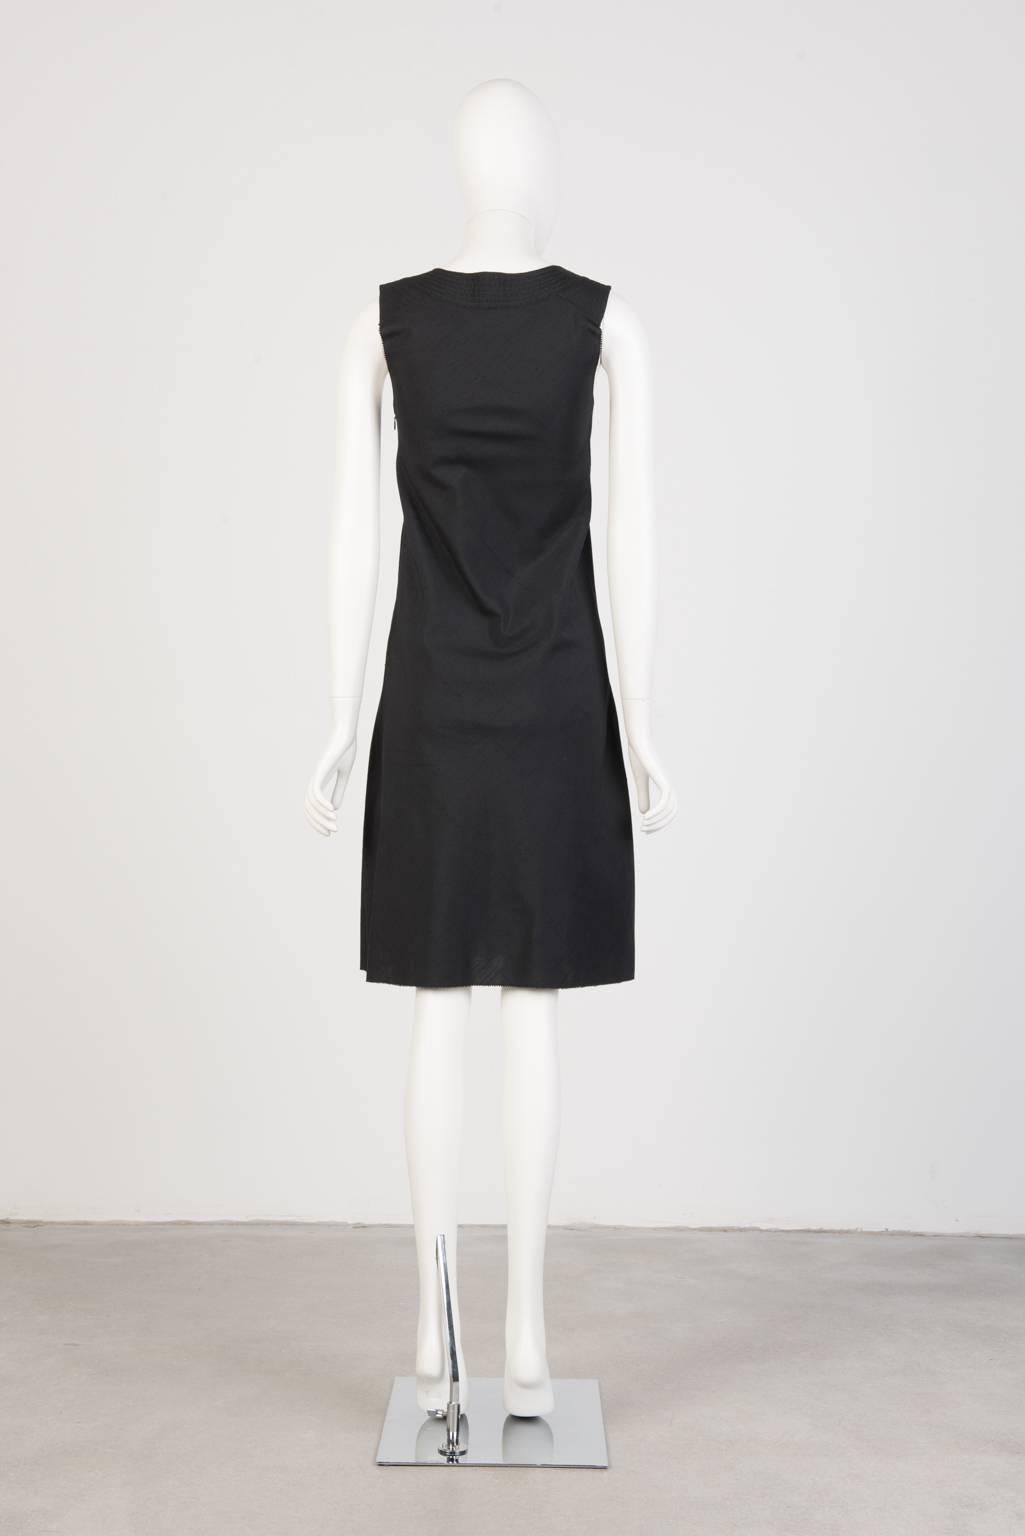 Nina Ricci Dress For Sale 1